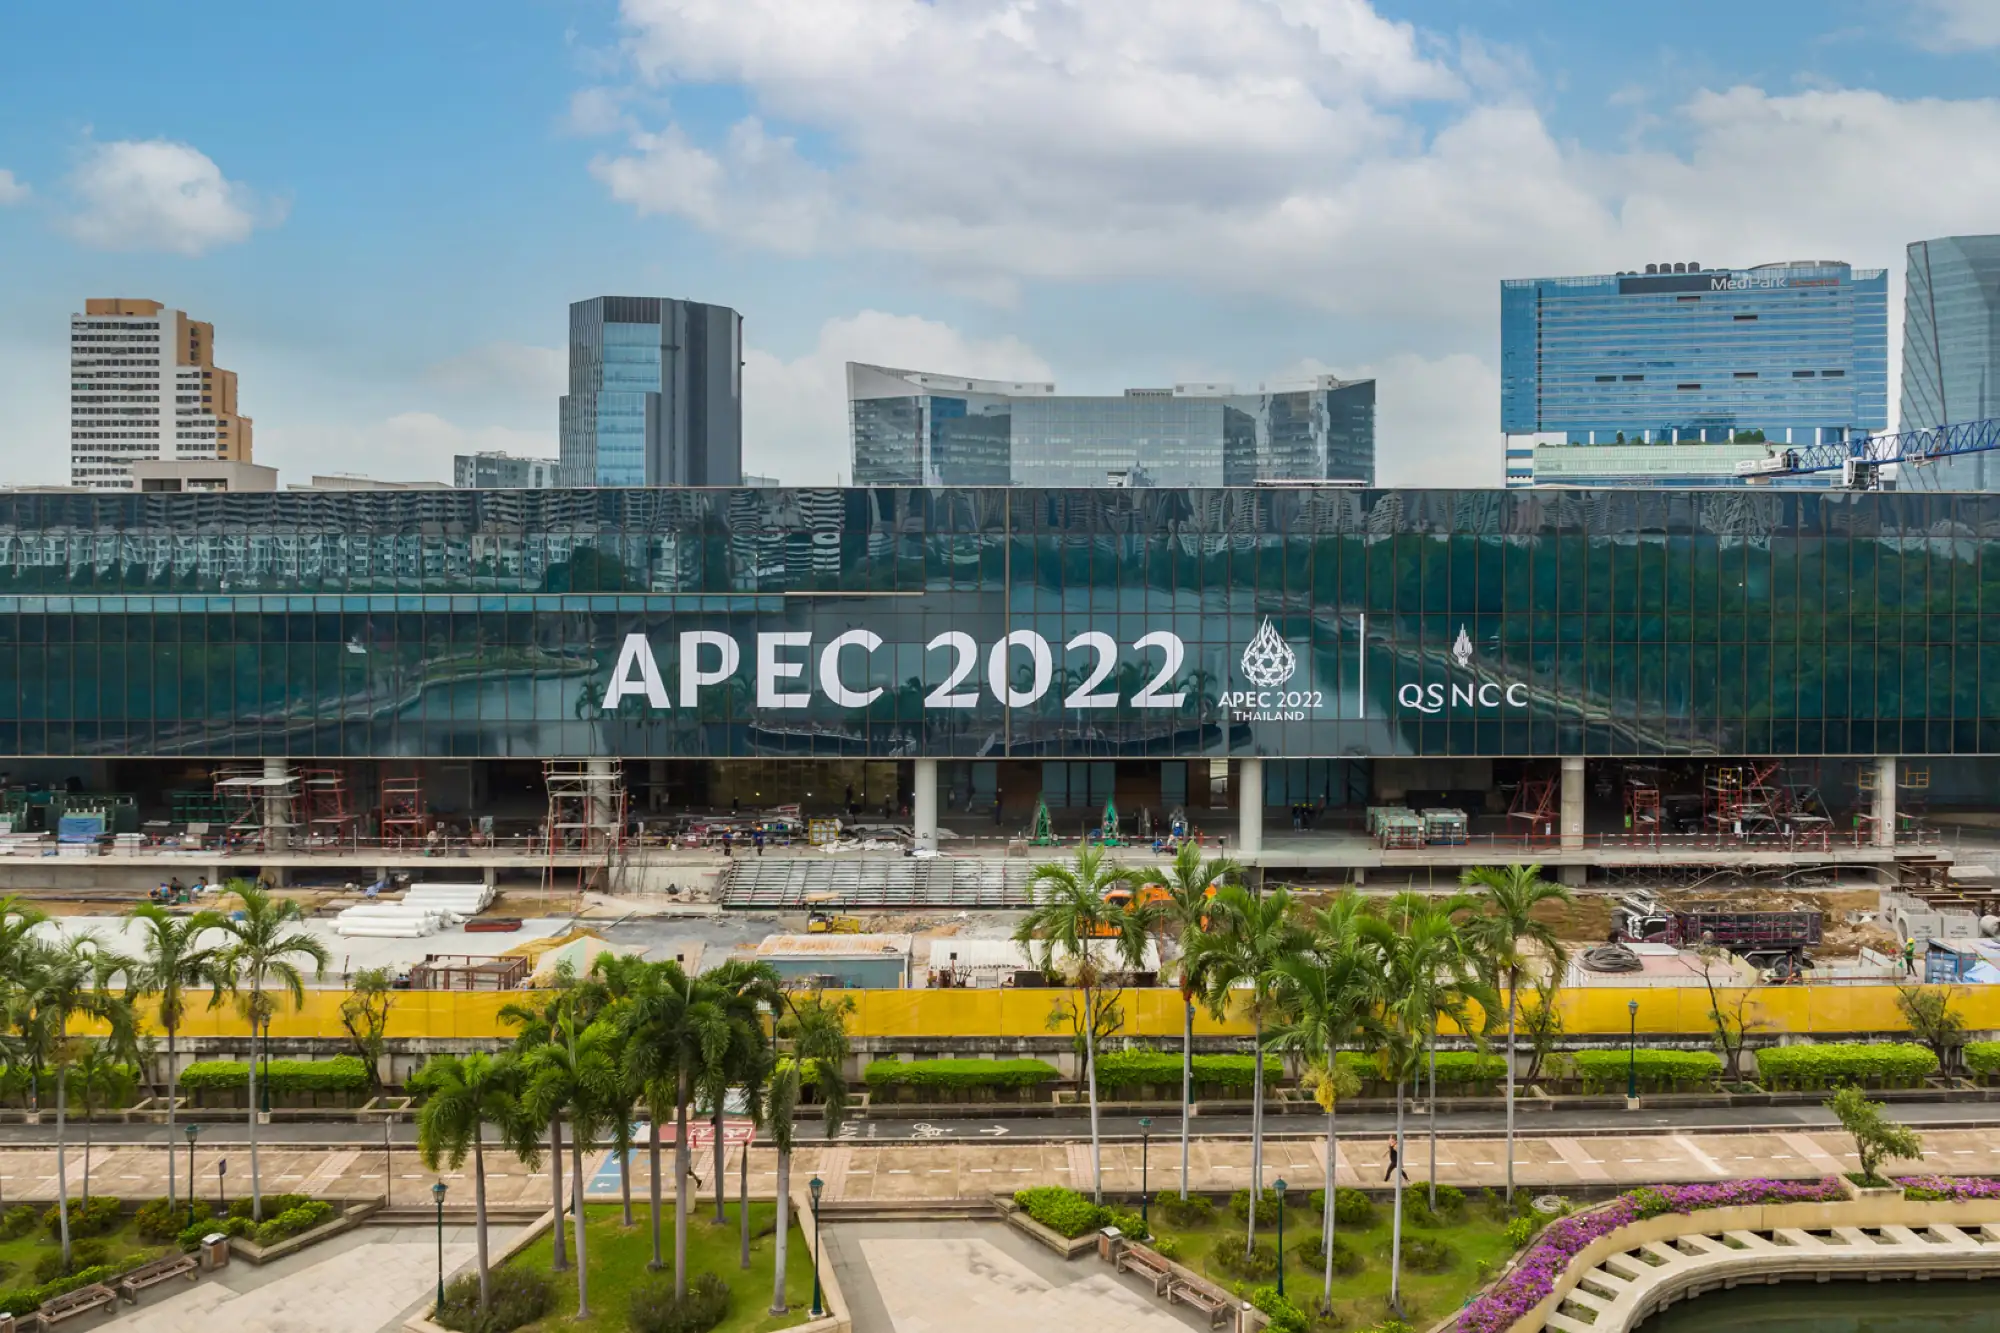 APEC領袖峰會曼谷登場 交通管制需注意（圖片來源：QSNCC官方臉書）